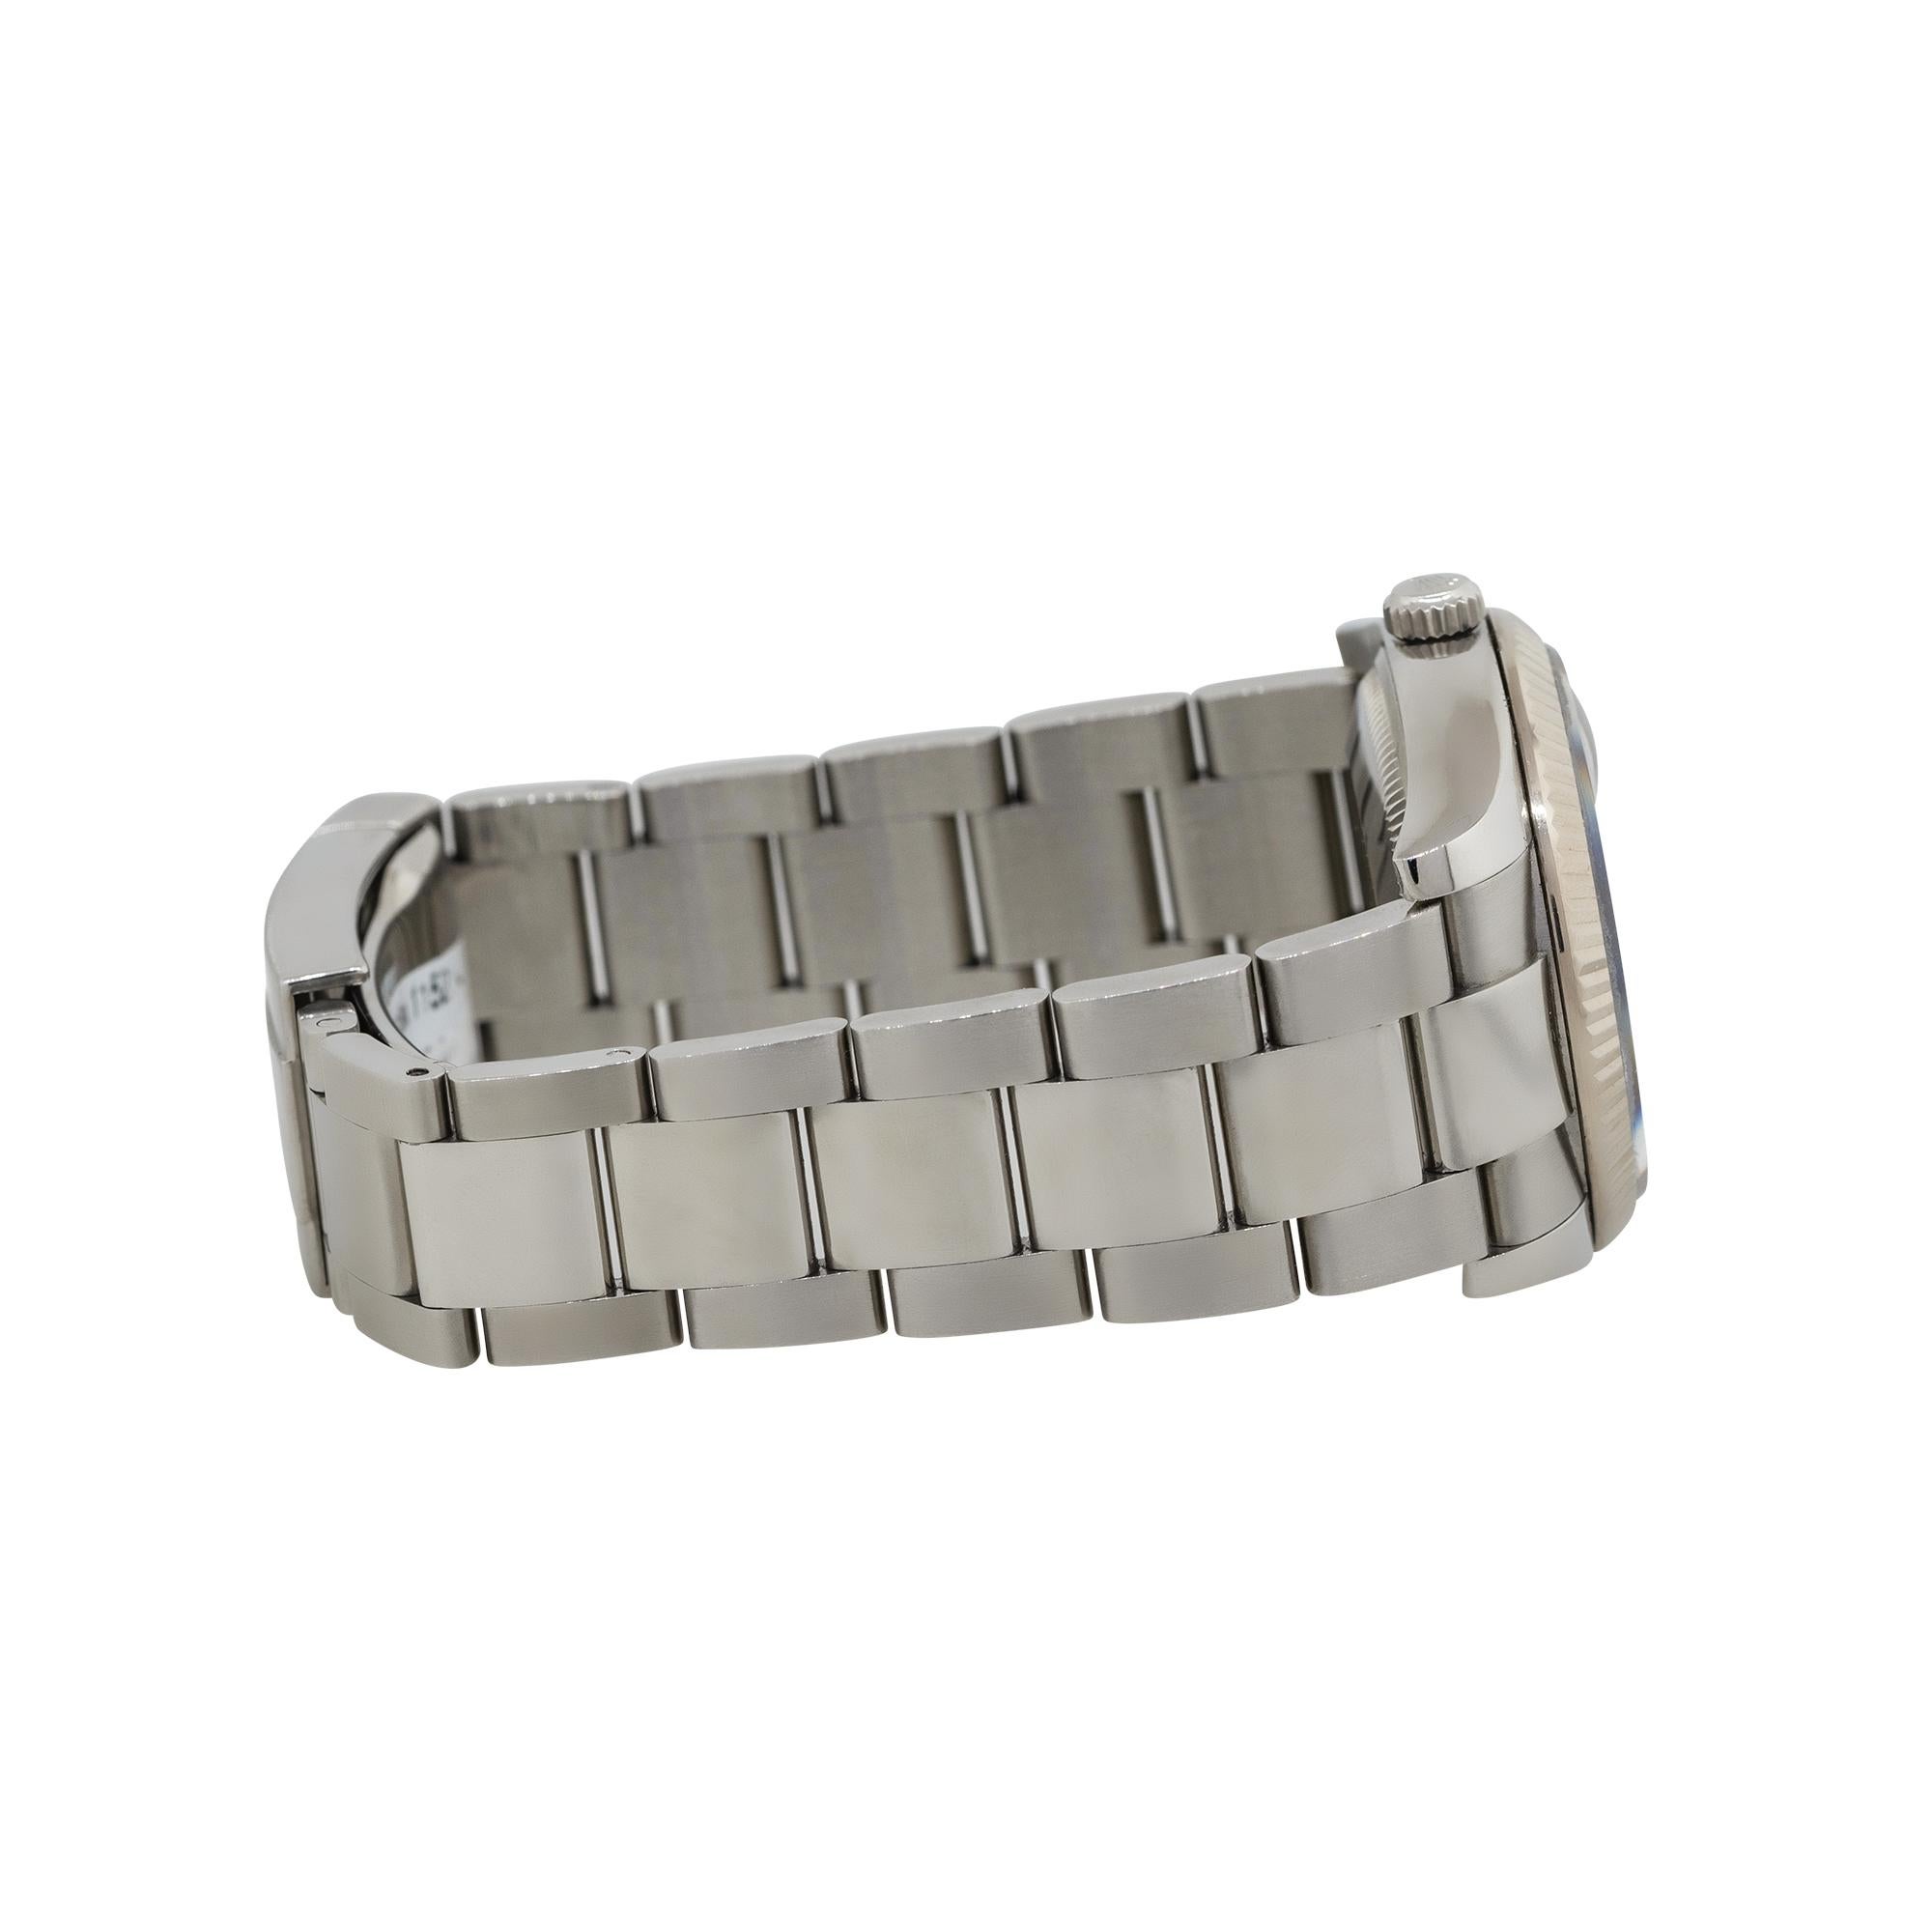 Rolex 115234 Datejust Stainless Steel Diamond Dial Watch 1